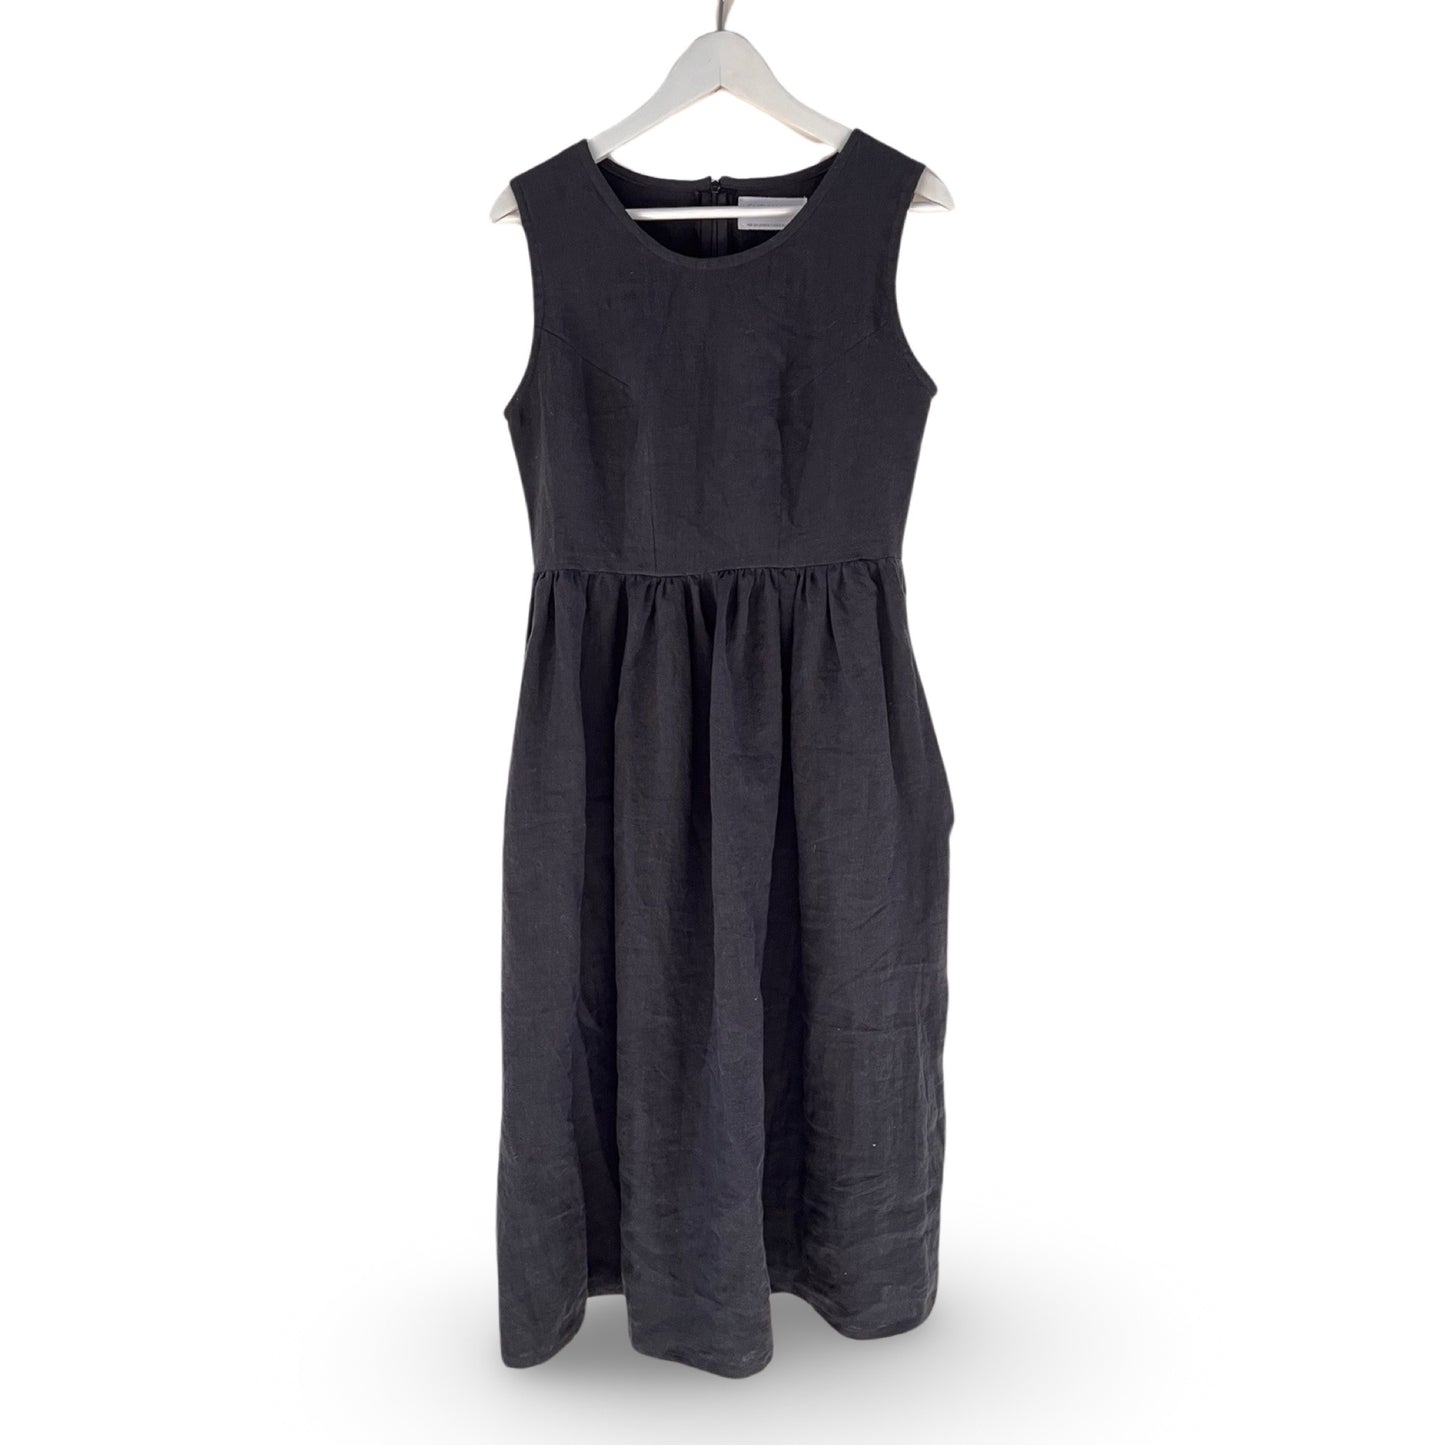 Sleeveless linen fit and flare midi dress- classic black